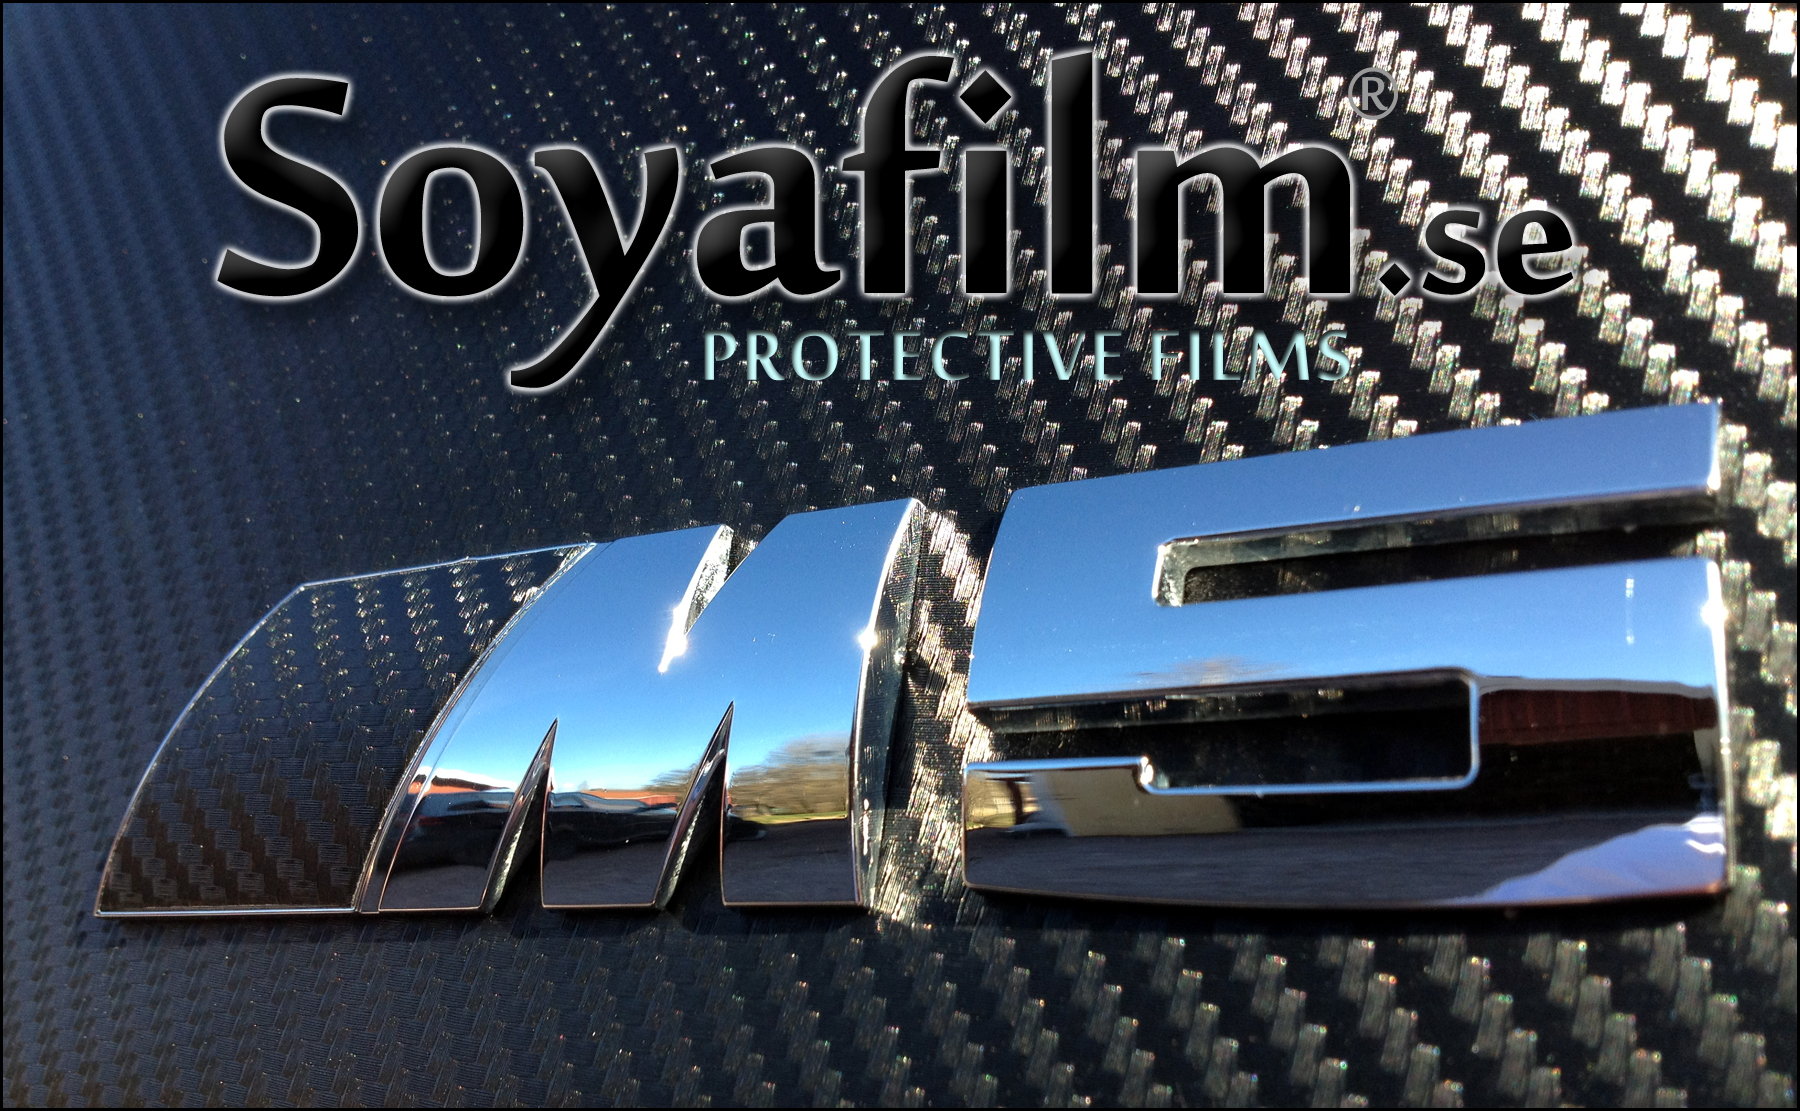 soyafilm-se-carbon-vinyl-kolfibervinyl-kolfiberfilm-bmw-e60-M5-wrapping-solfilm-stenskottsfilm-lackskydsfilm